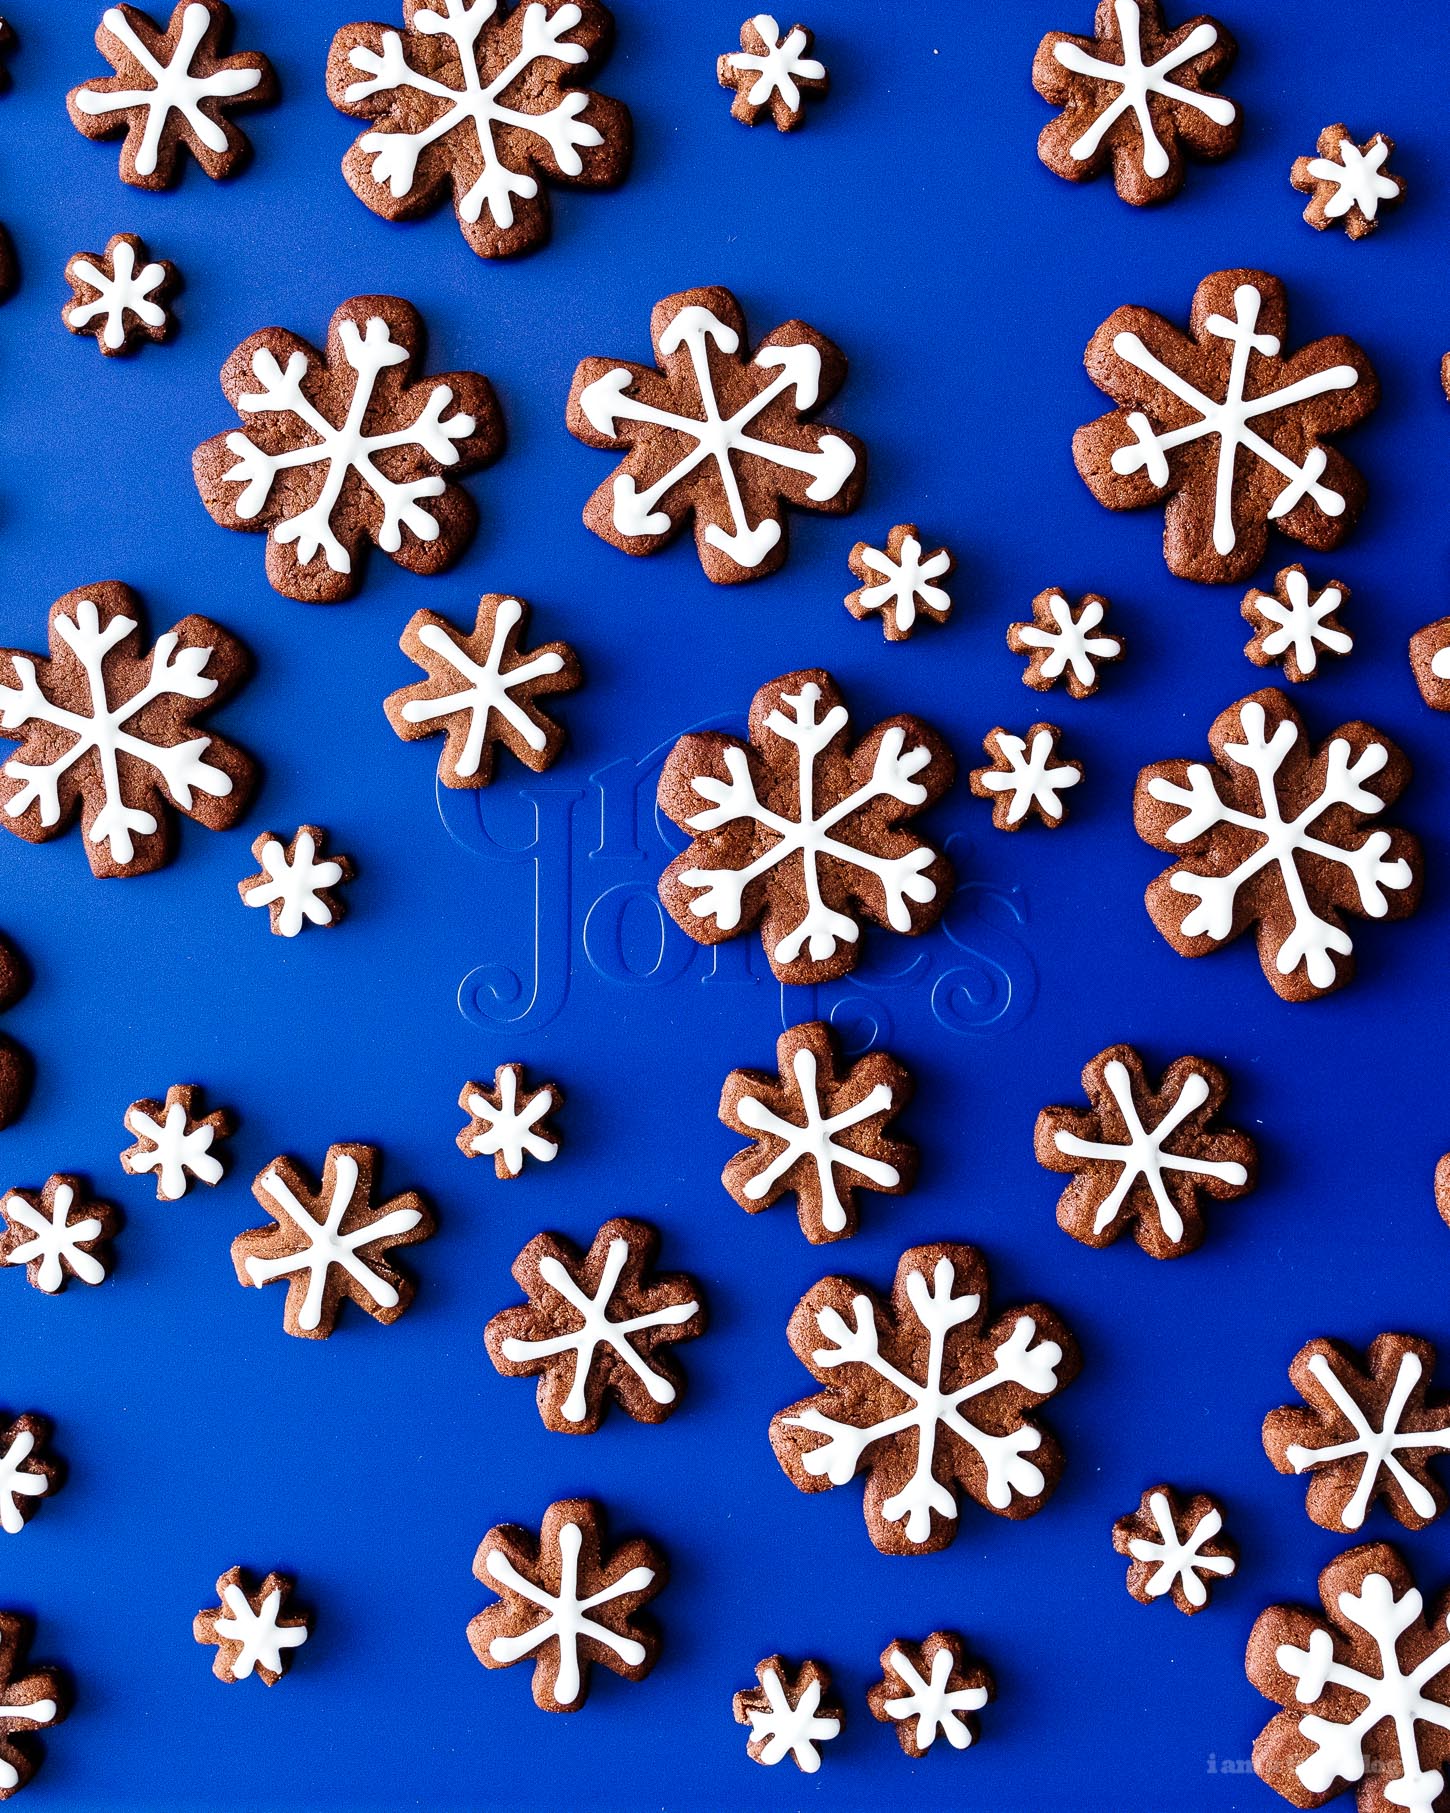 simple cut out gingerbread cookies #gingerbread #baking #cookies #recipe